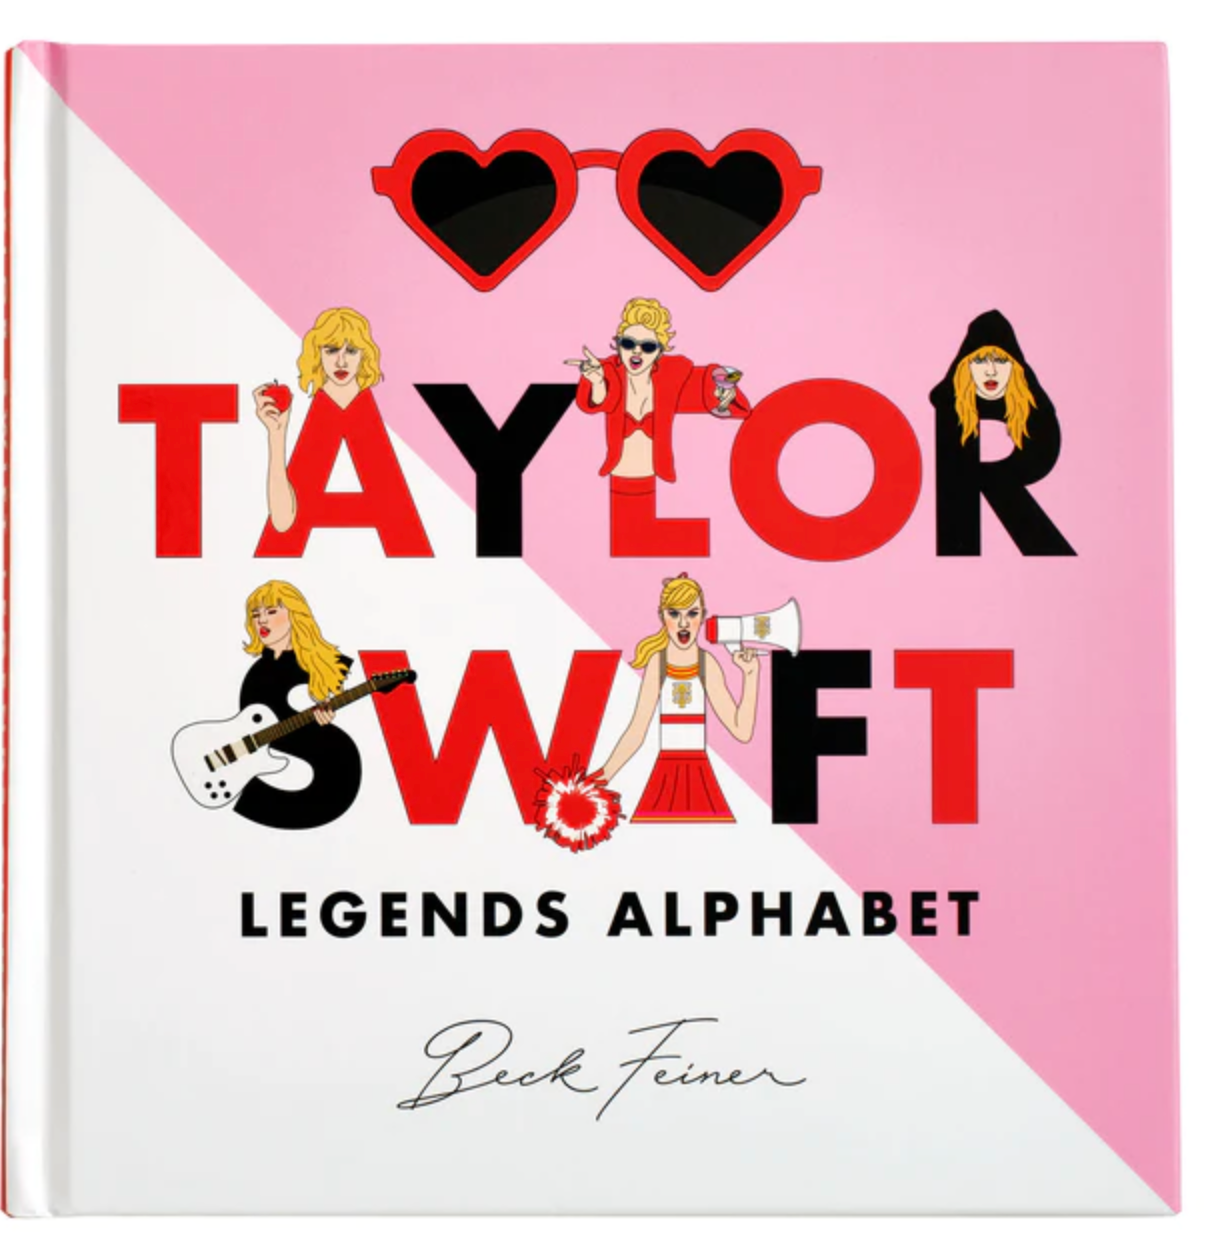 Taylor Swift Alphabet Book